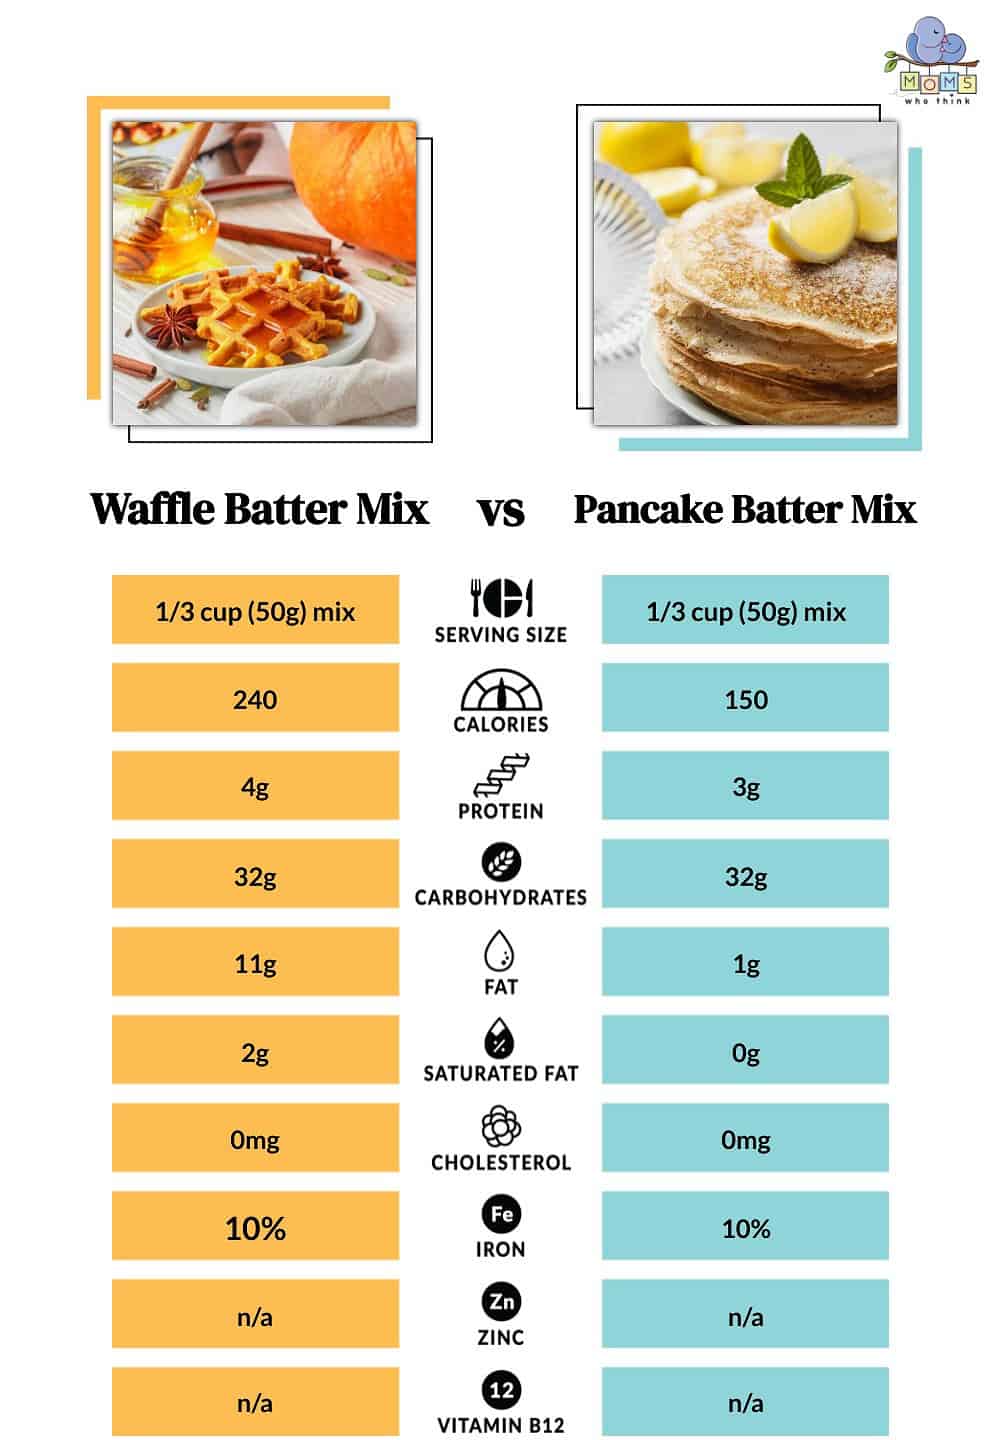 Waffle Batter Mix vs Pancake Batter Mix Nutritional Facts